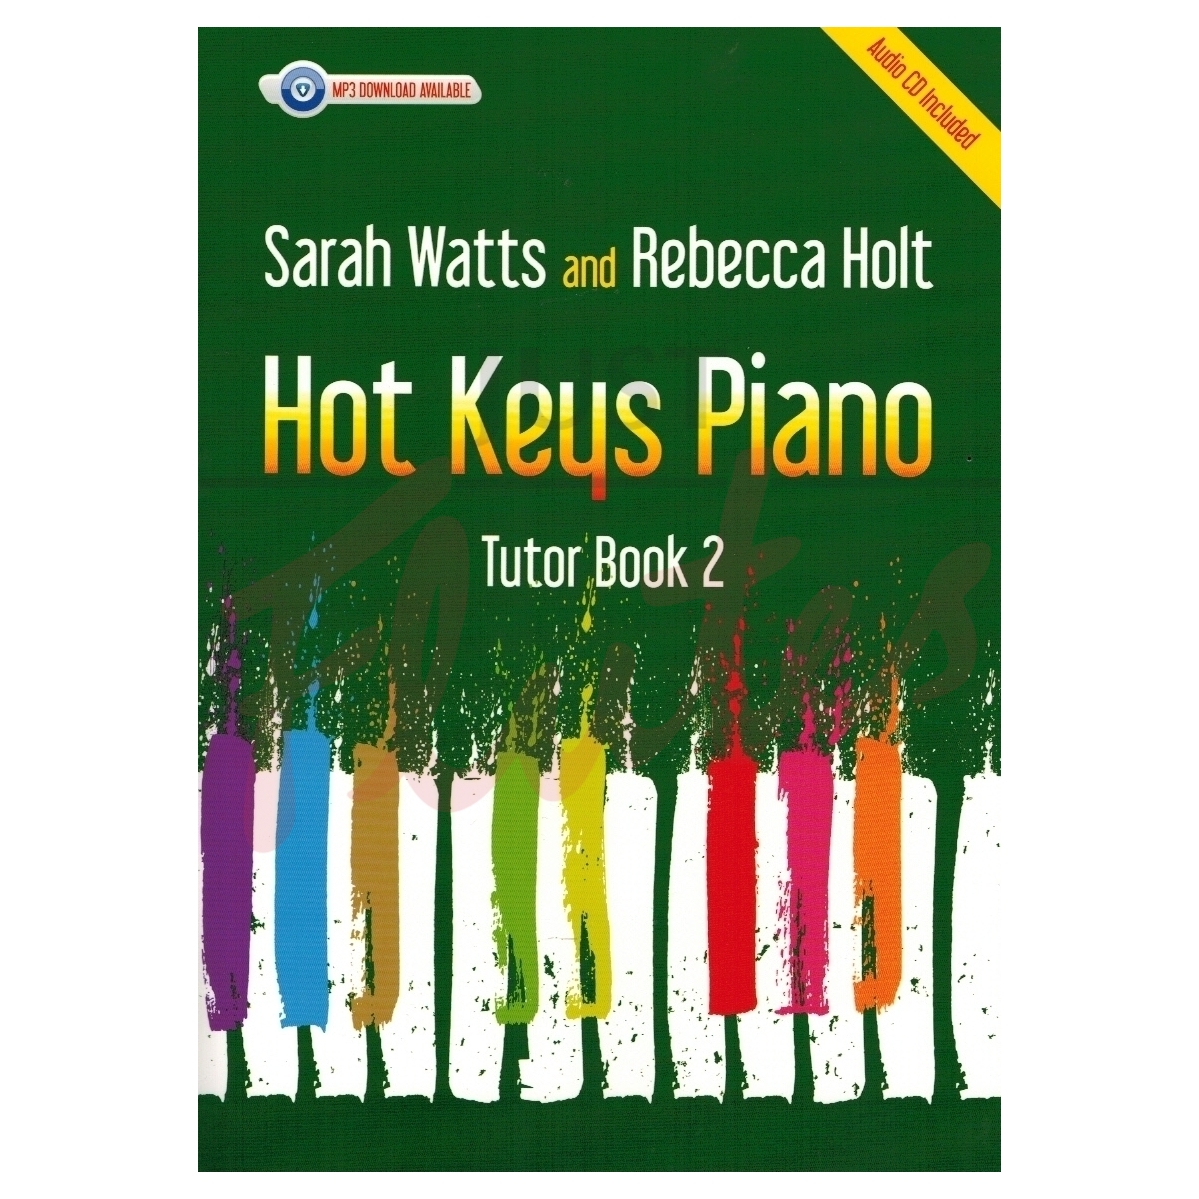 Hot Keys Piano Tutor Book 2